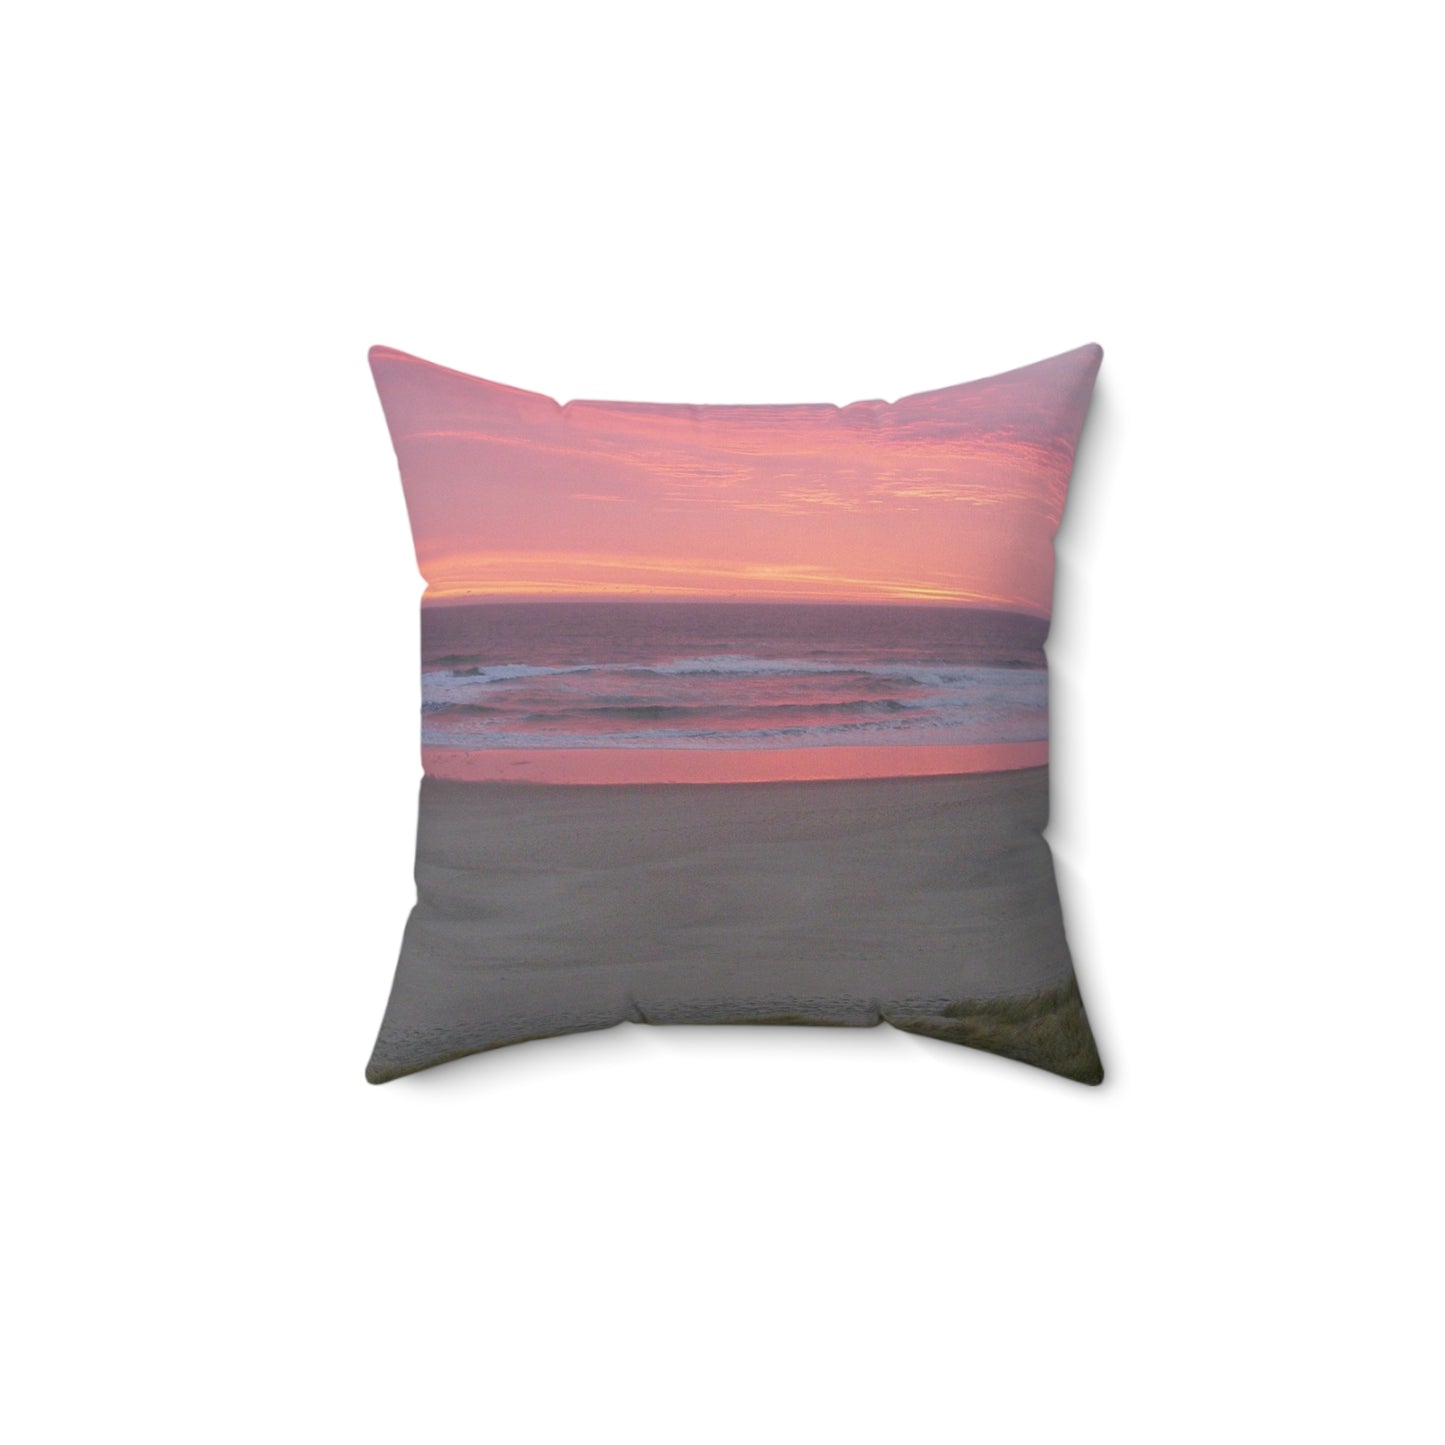 Pink Ocean Sunset Spun Polyester Square Pillow